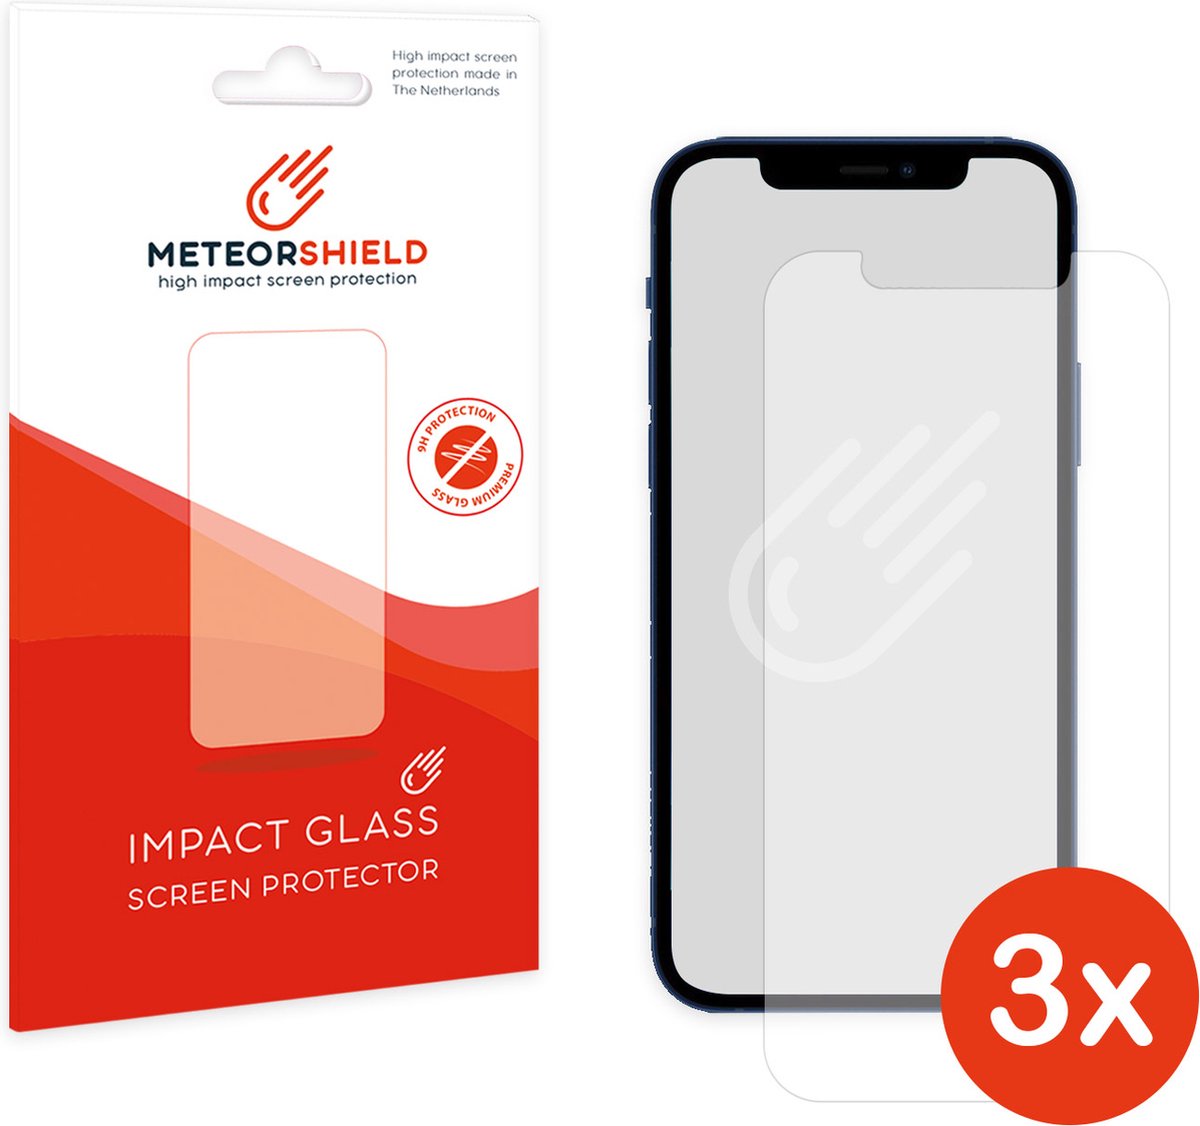 3 stuks: Meteorshield iPhone 12 Mini screenprotector - Ultra clear impact glass